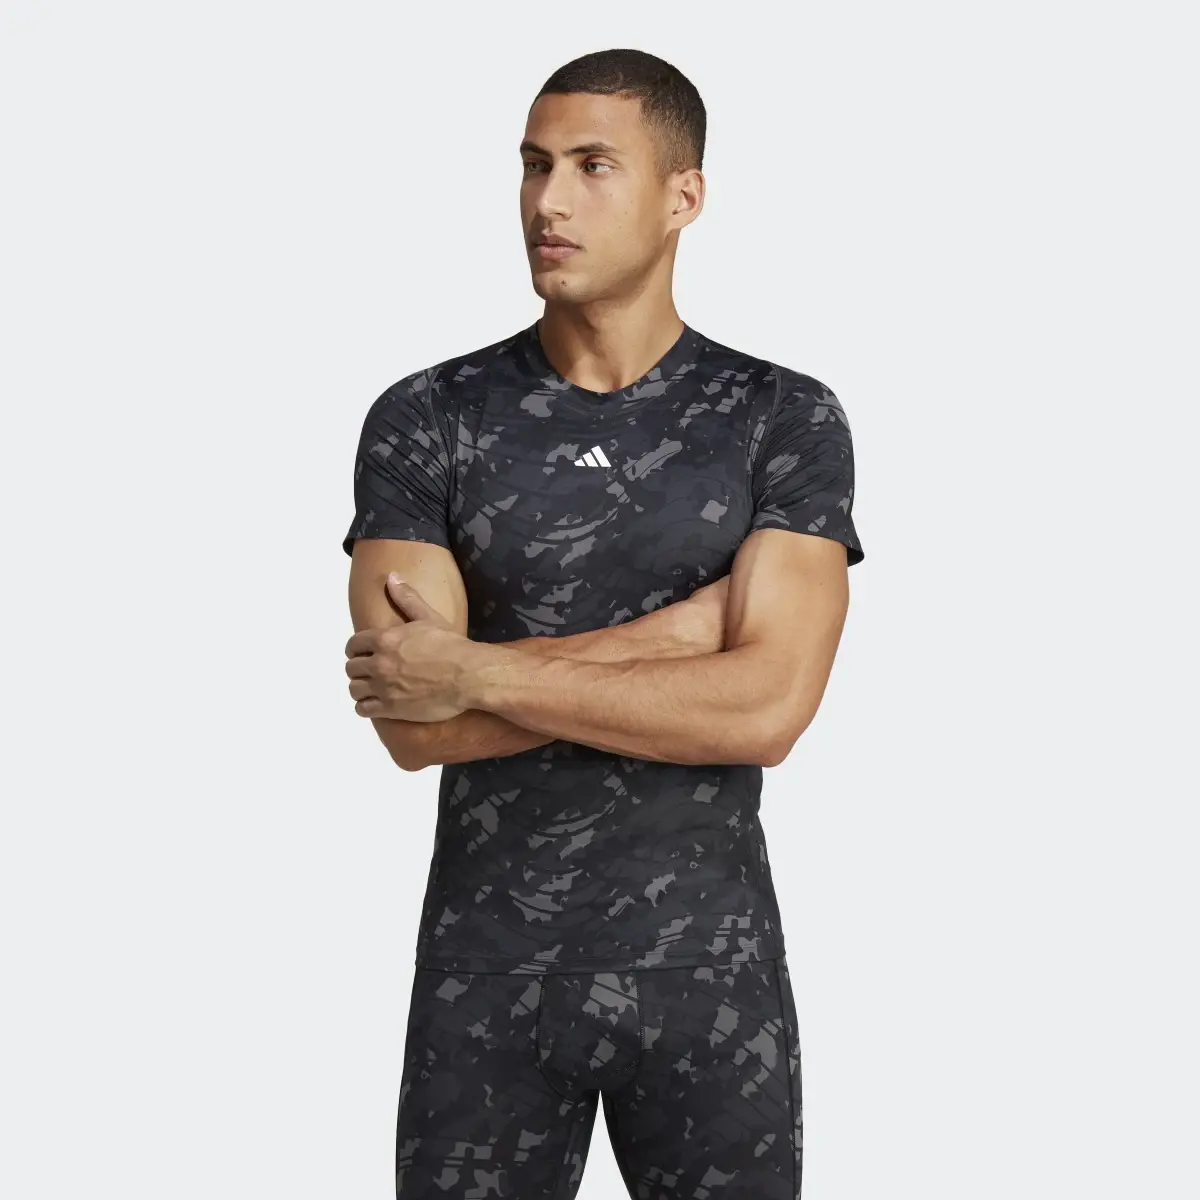 Adidas Techfit Allover Print Training Tişörtü. 2